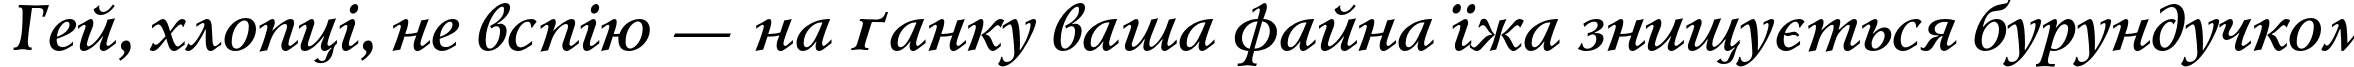 Пример написания шрифтом LazurskiC Bold Italic текста на украинском